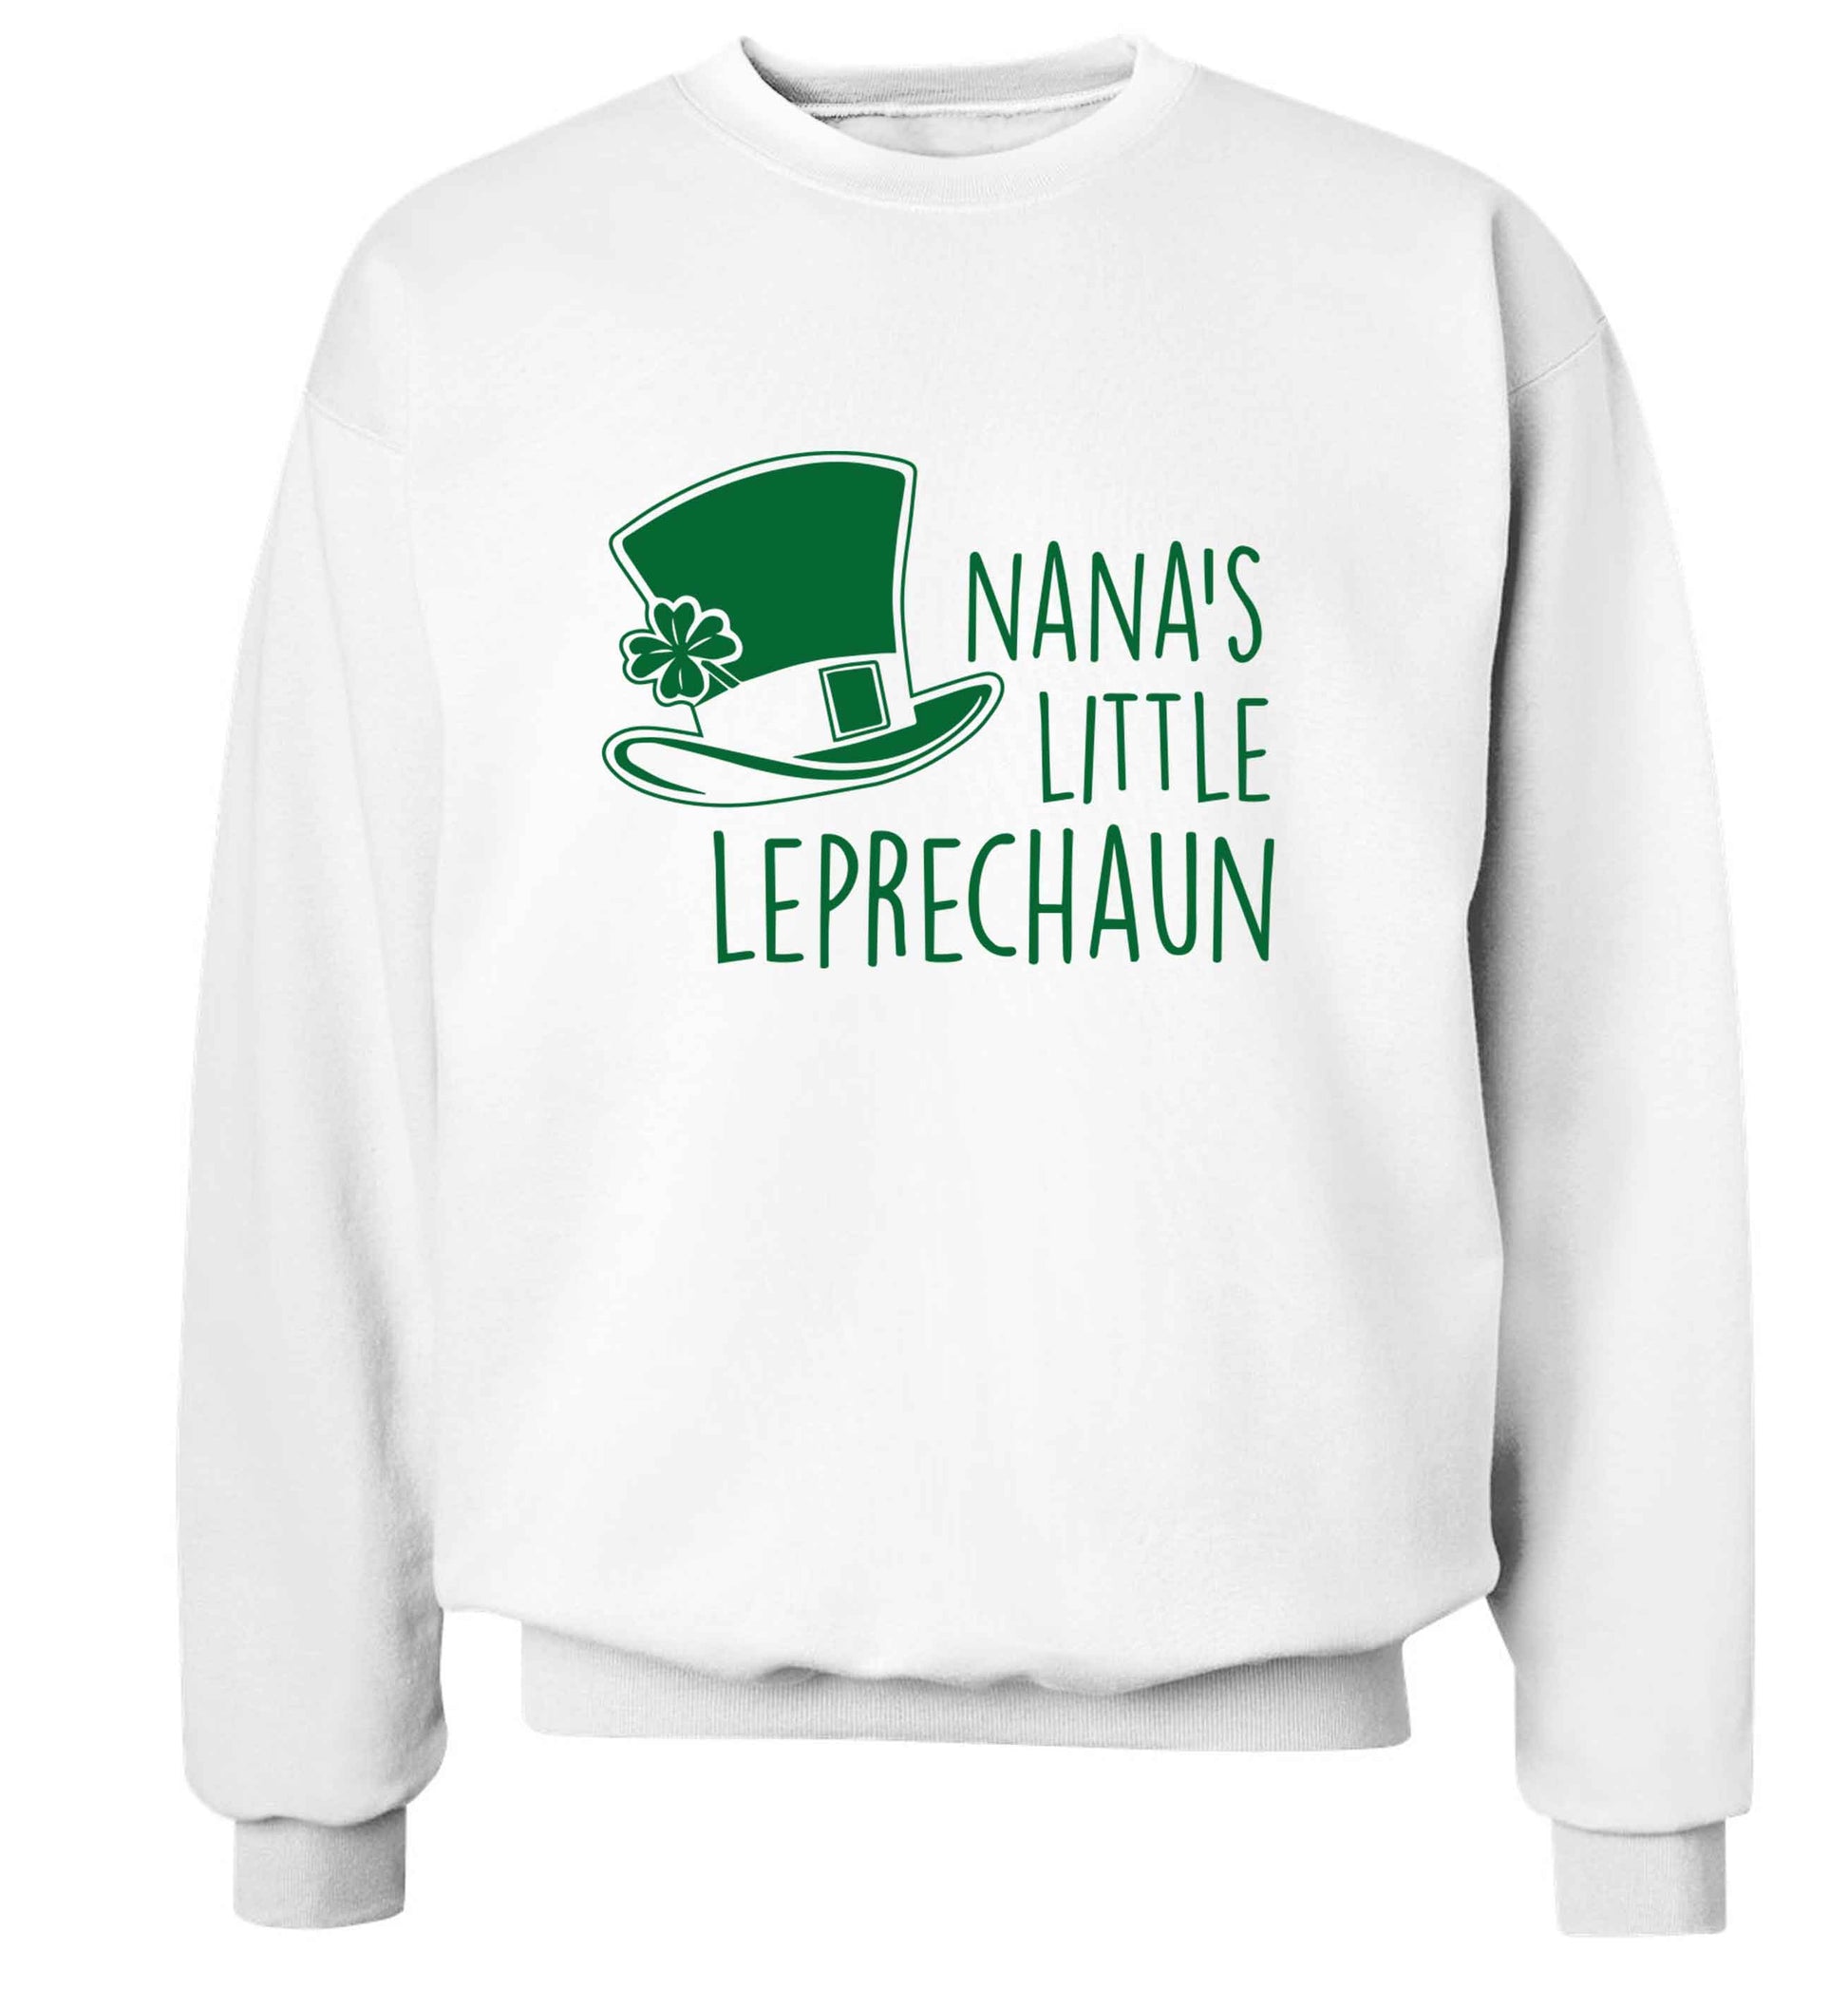 Nana's little leprechaun adult's unisex white sweater 2XL